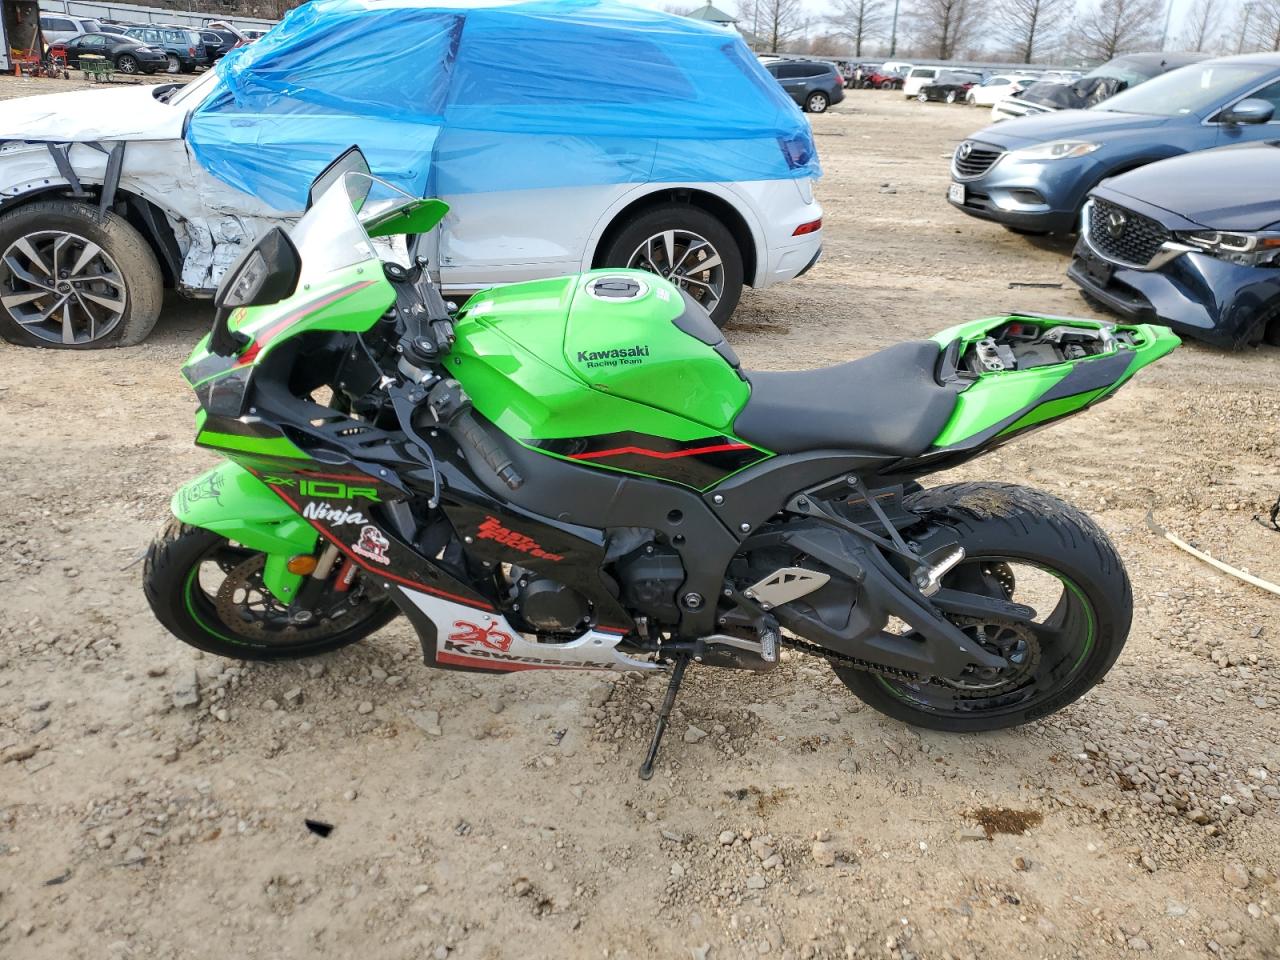 2021 Kawasaki ZX1002 M for sale at Copart Bridgeton, MO. Lot 